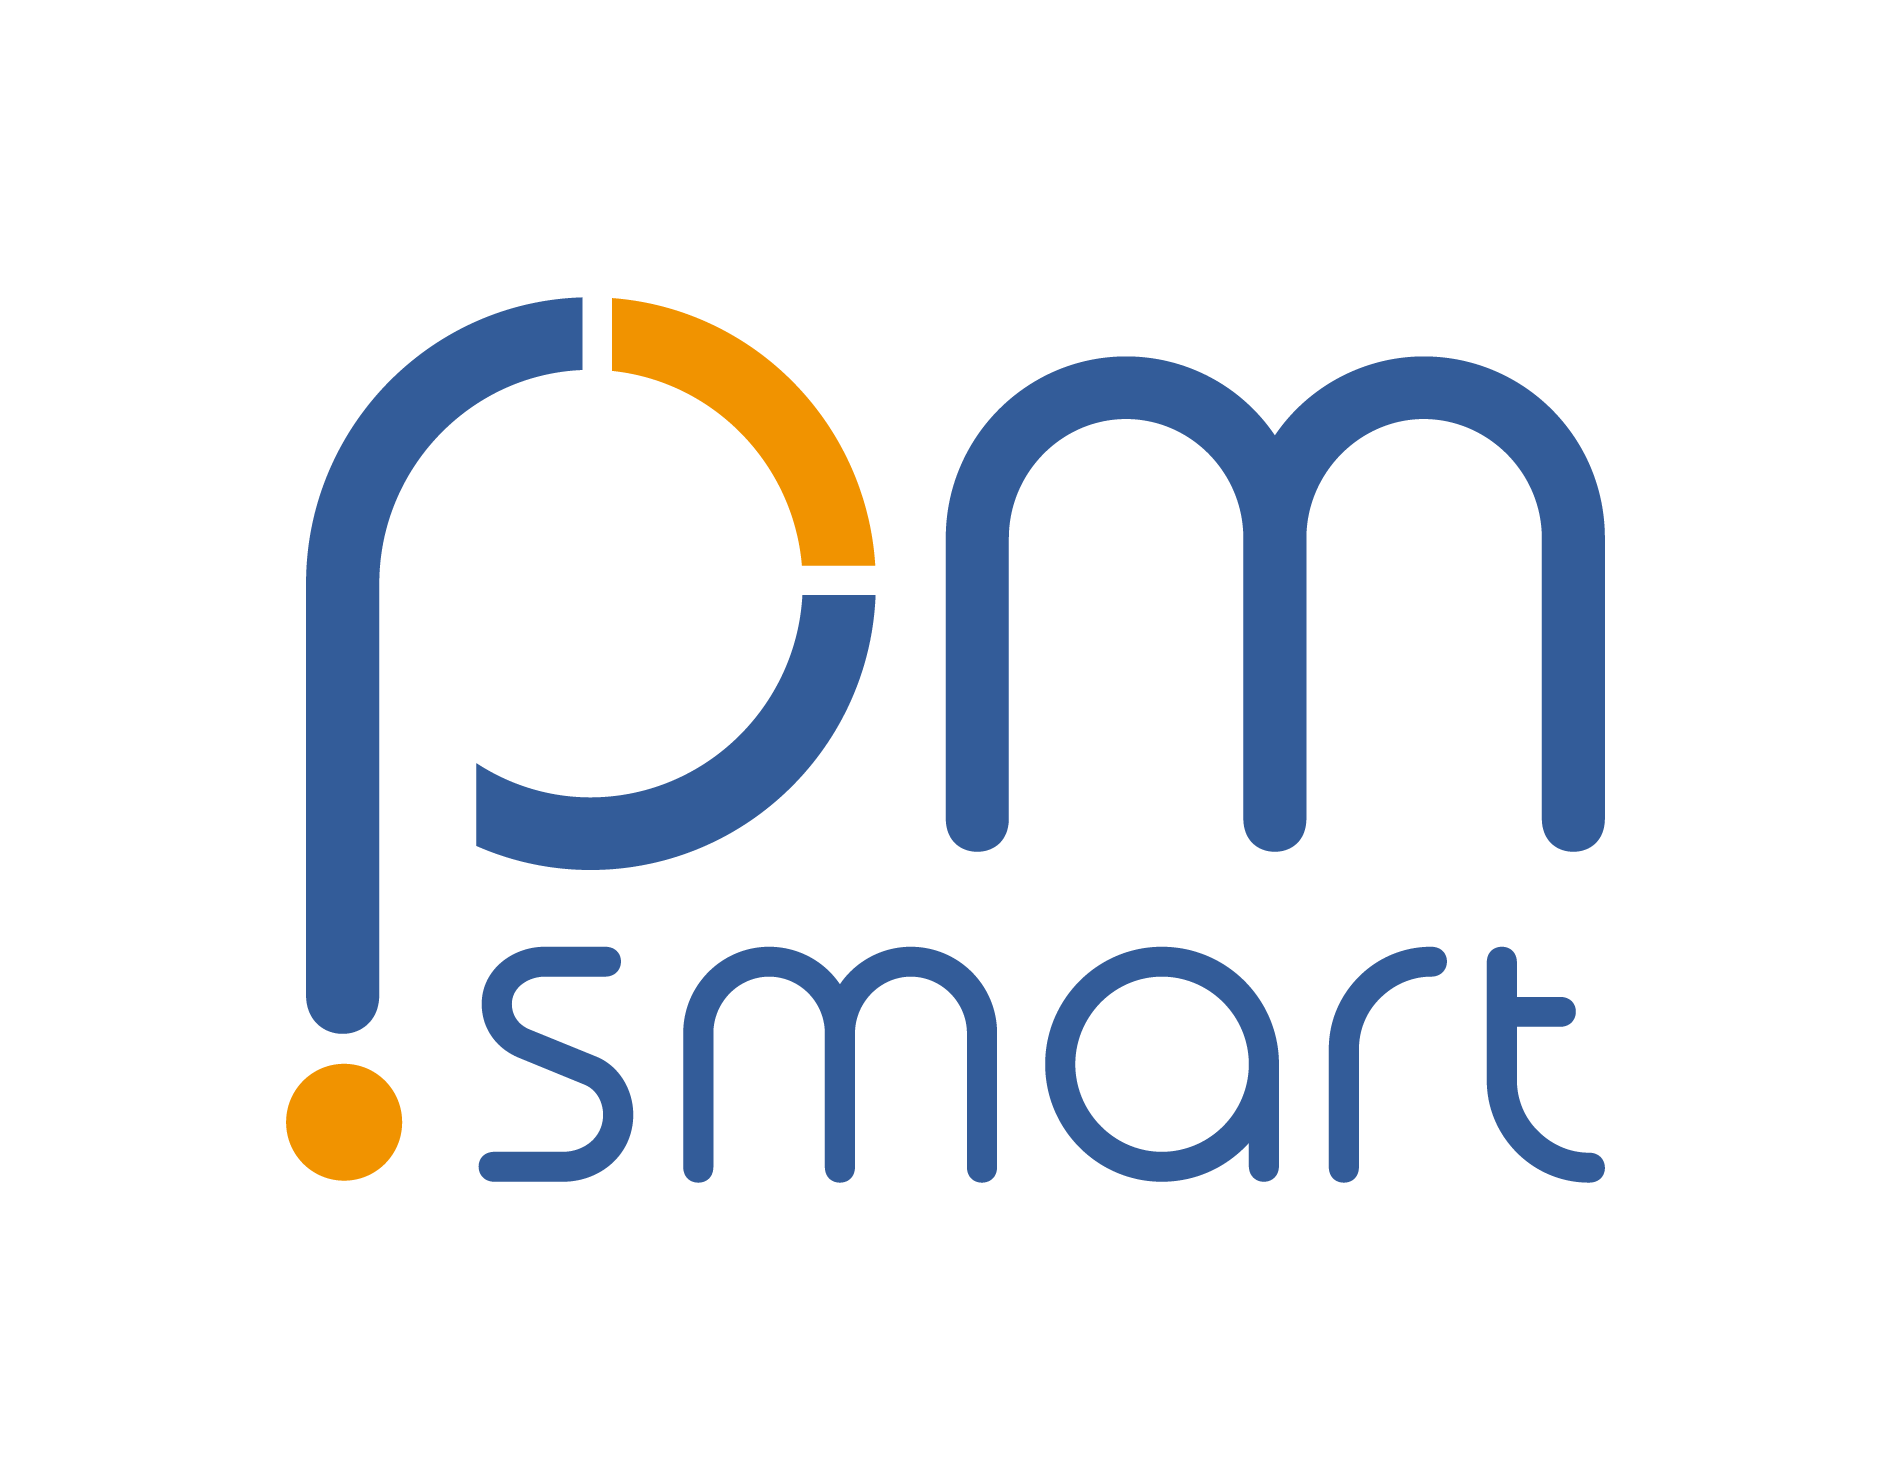 pm-smart Logo